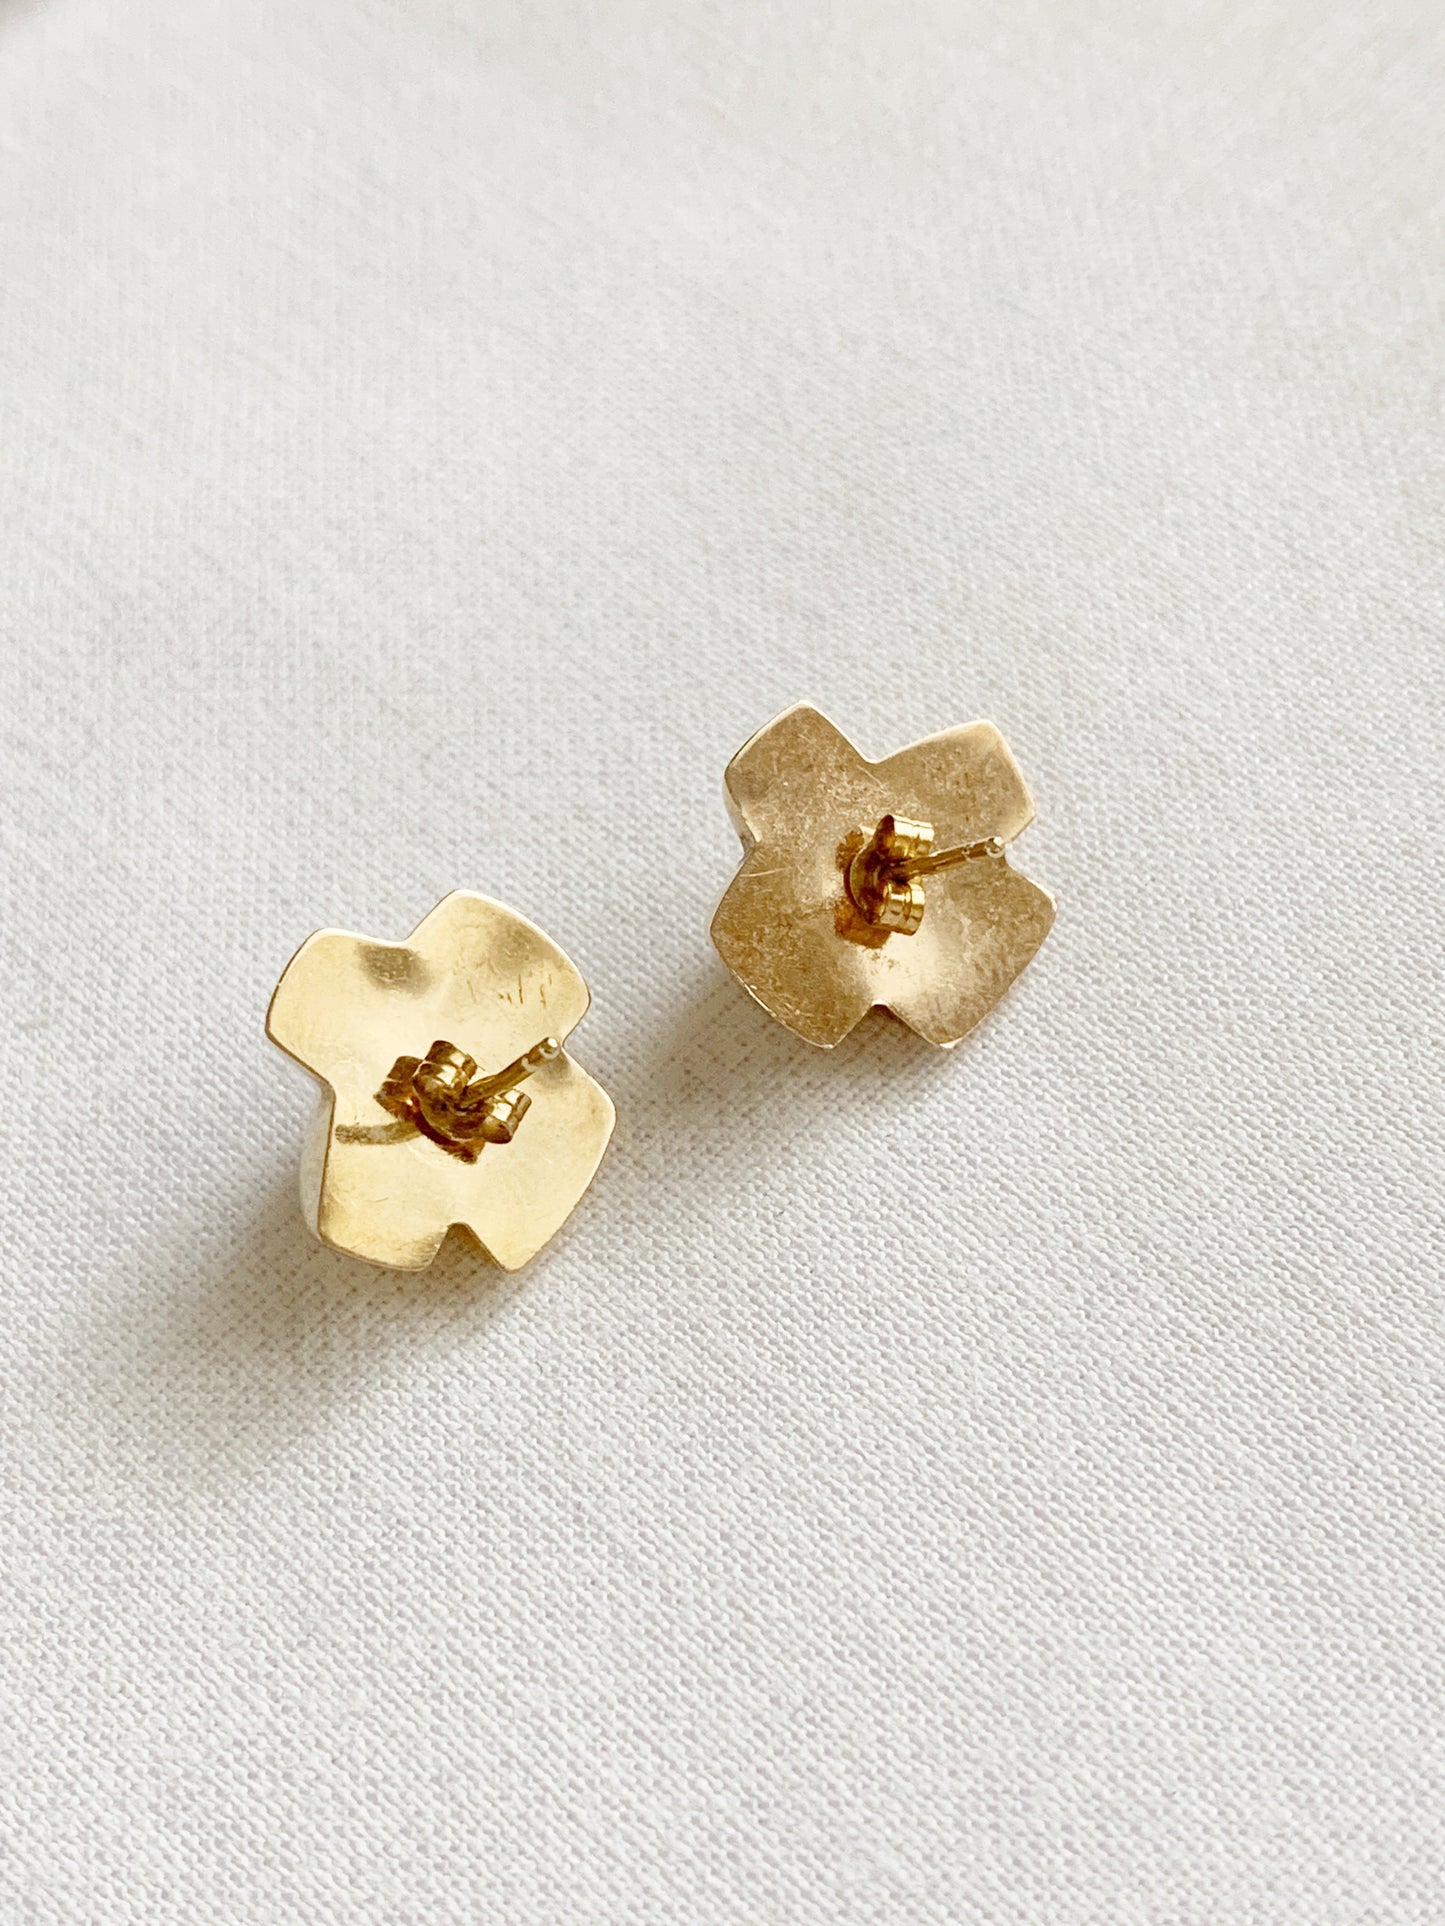 Vintage 9ct Gold Kiss Earrings Studs